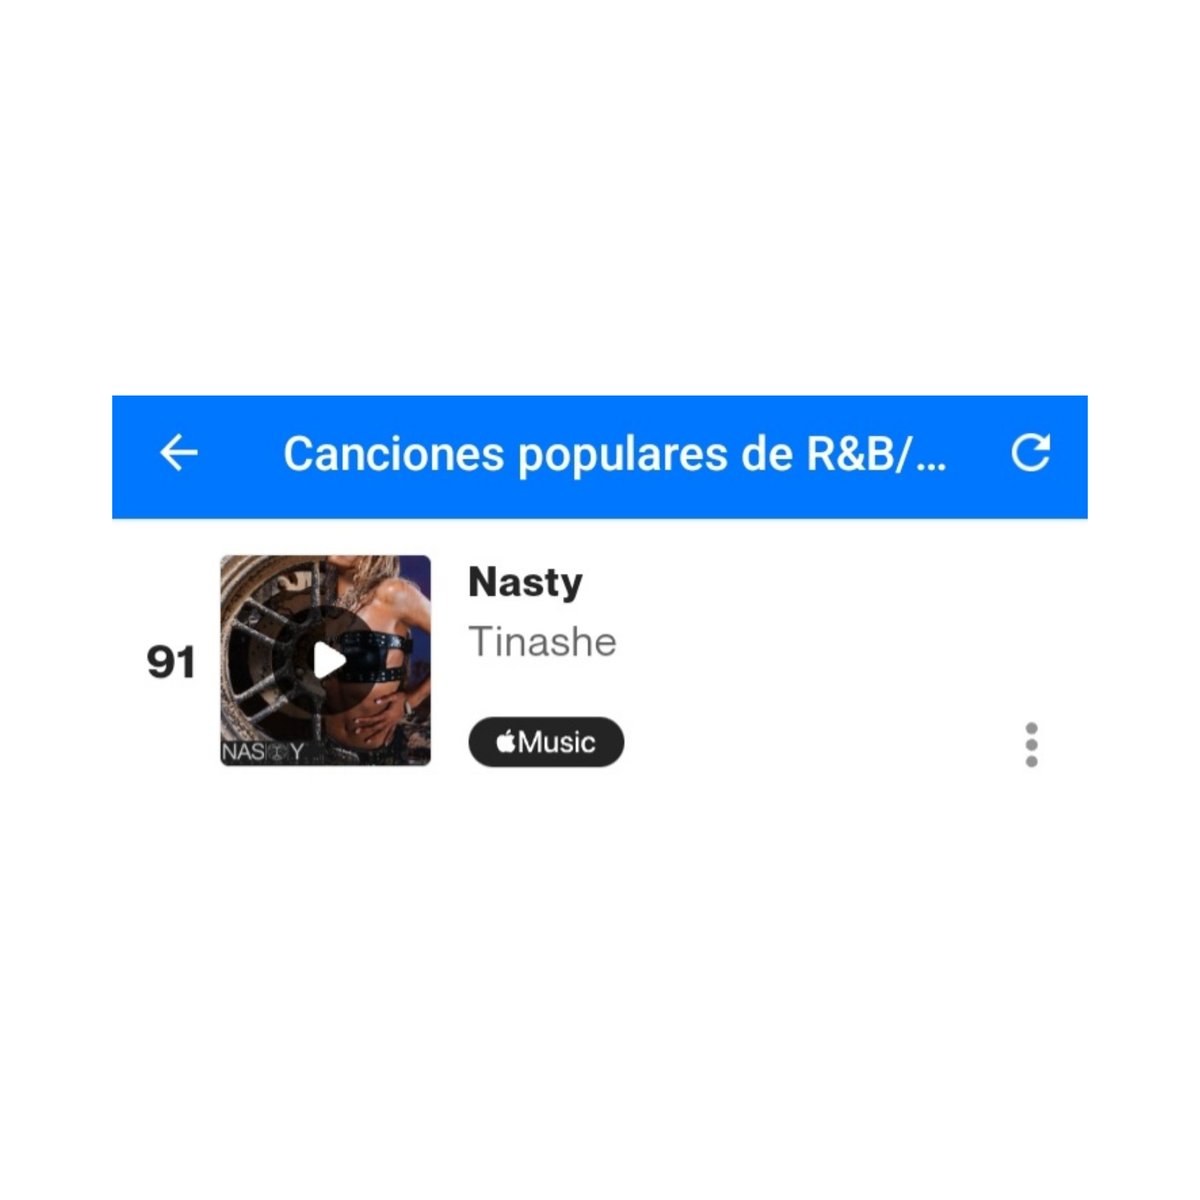 .@Tinashe’s “Nasty” debuts at #91 on @Shazam’s Global R&B/Soul Chart. 🌎